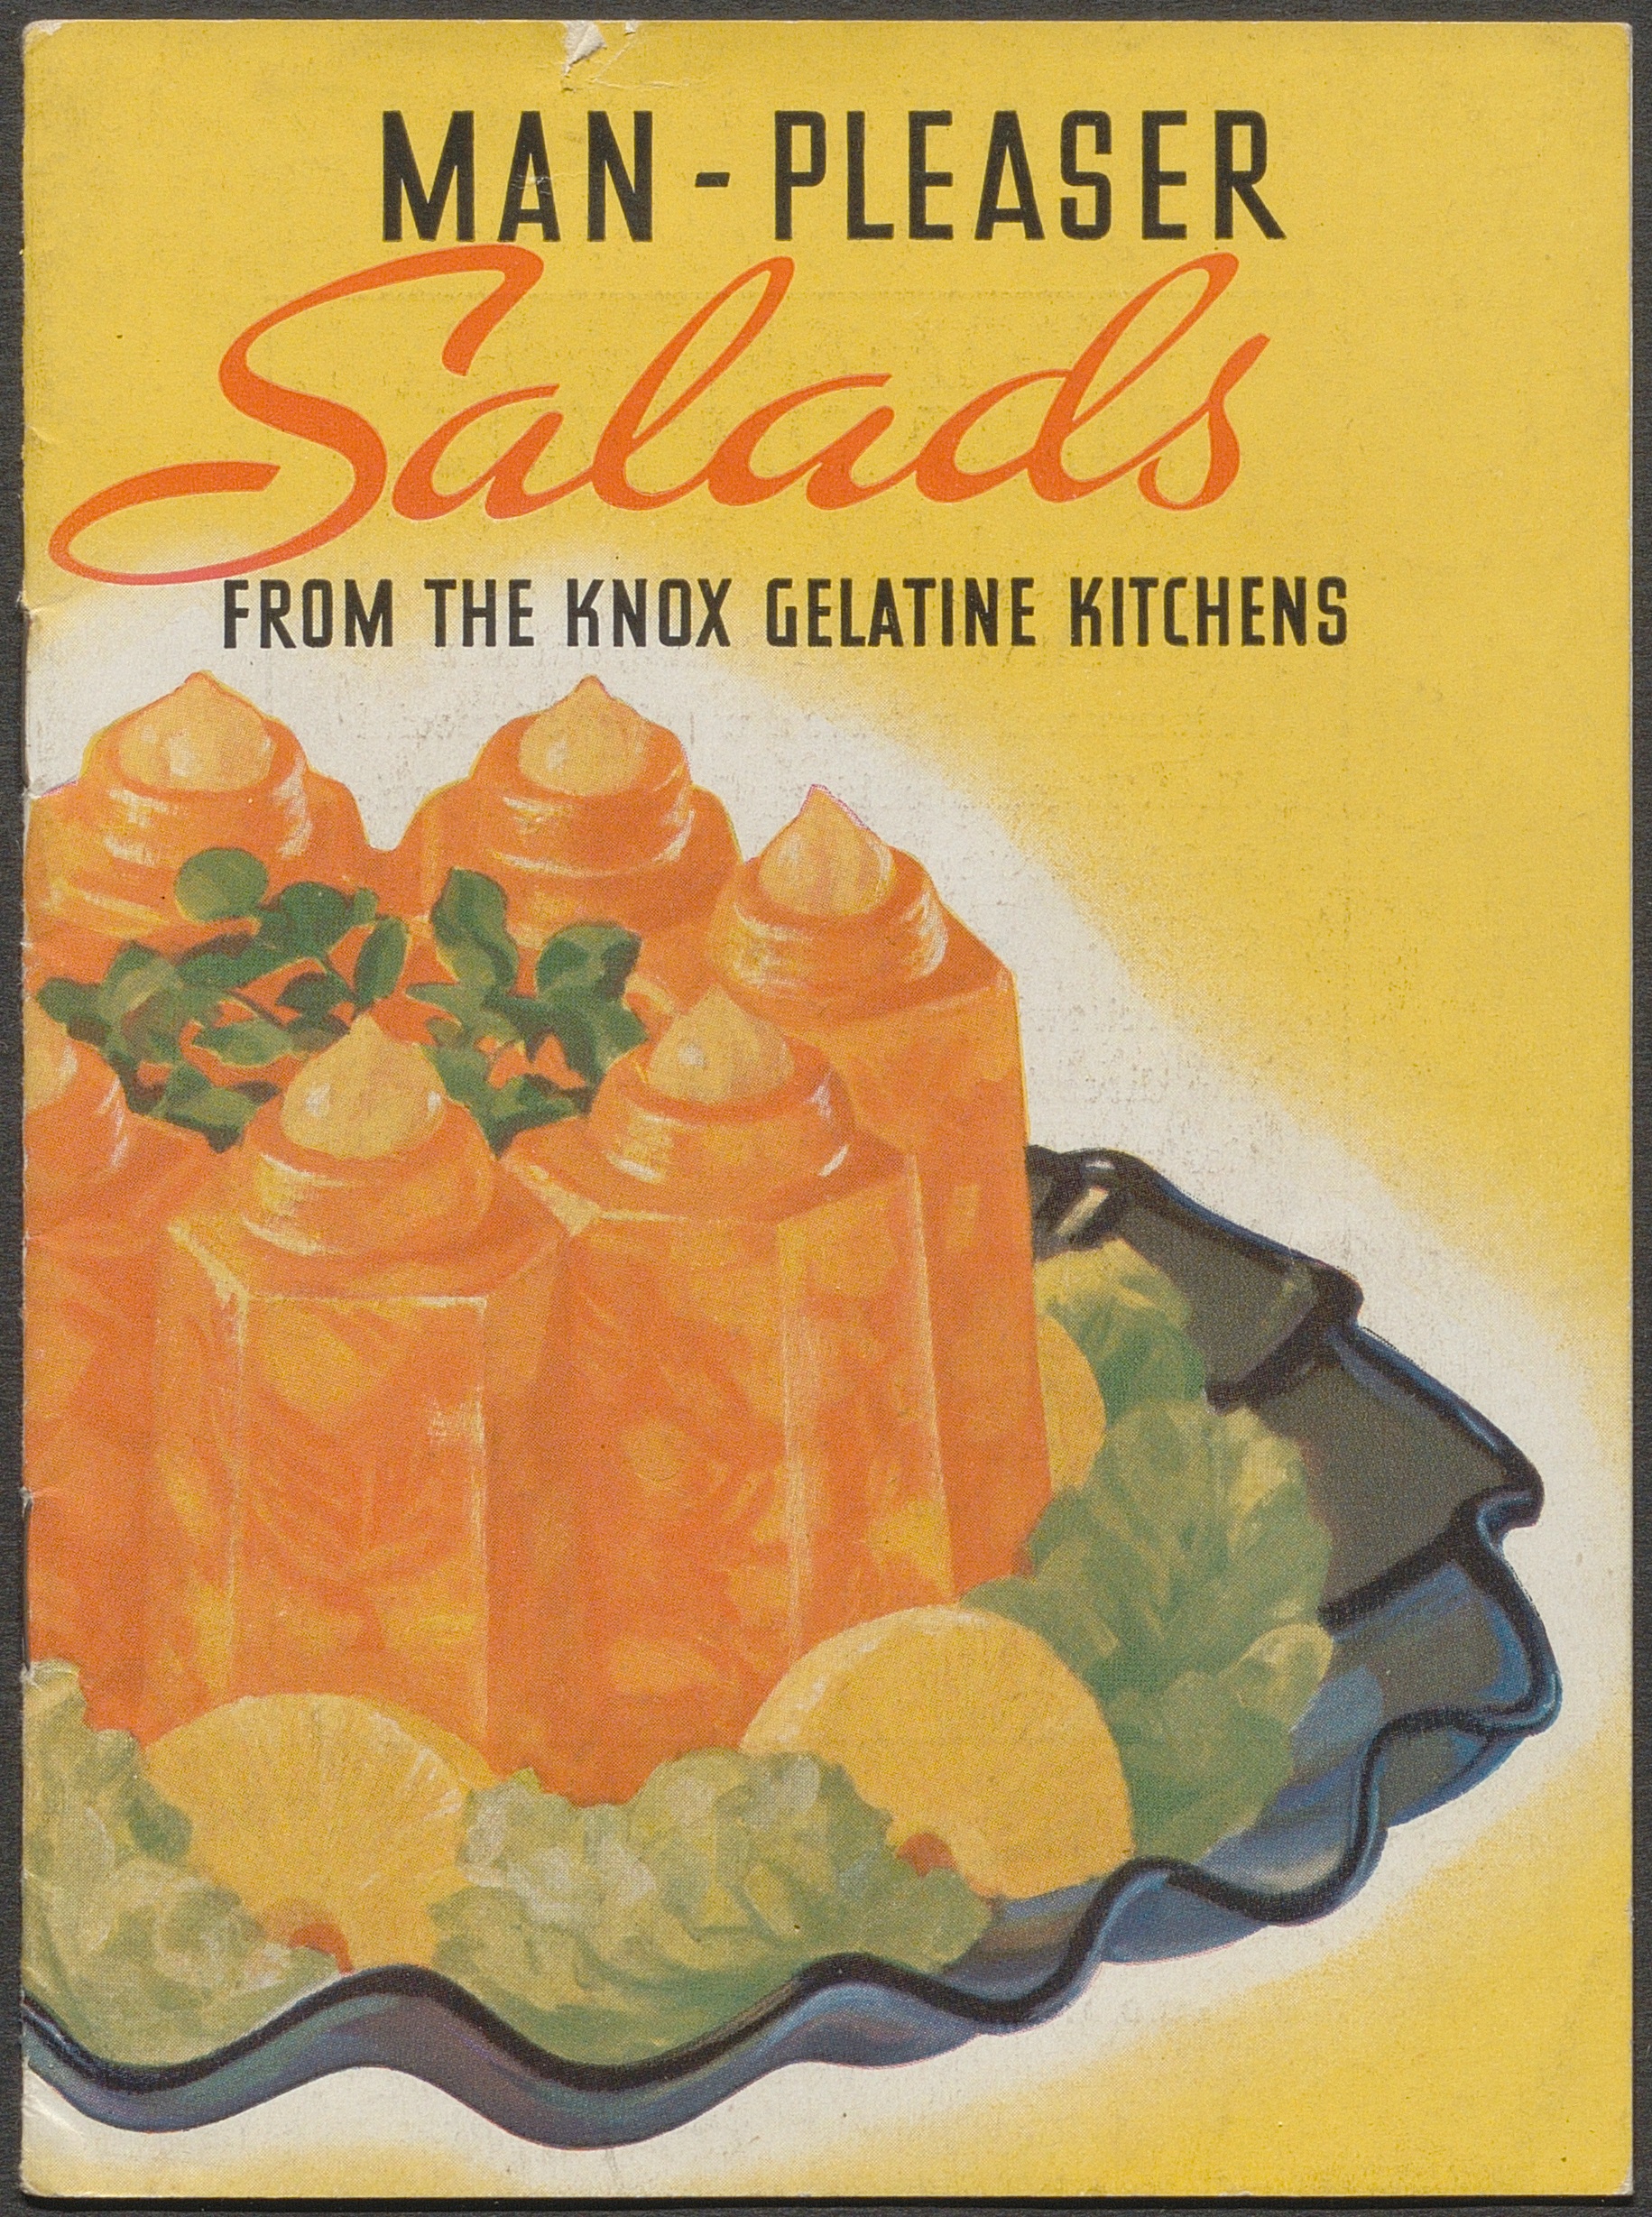 Pamphlet titled "Man-Pleaser Salads" with an illustration of a gelatin mold salad